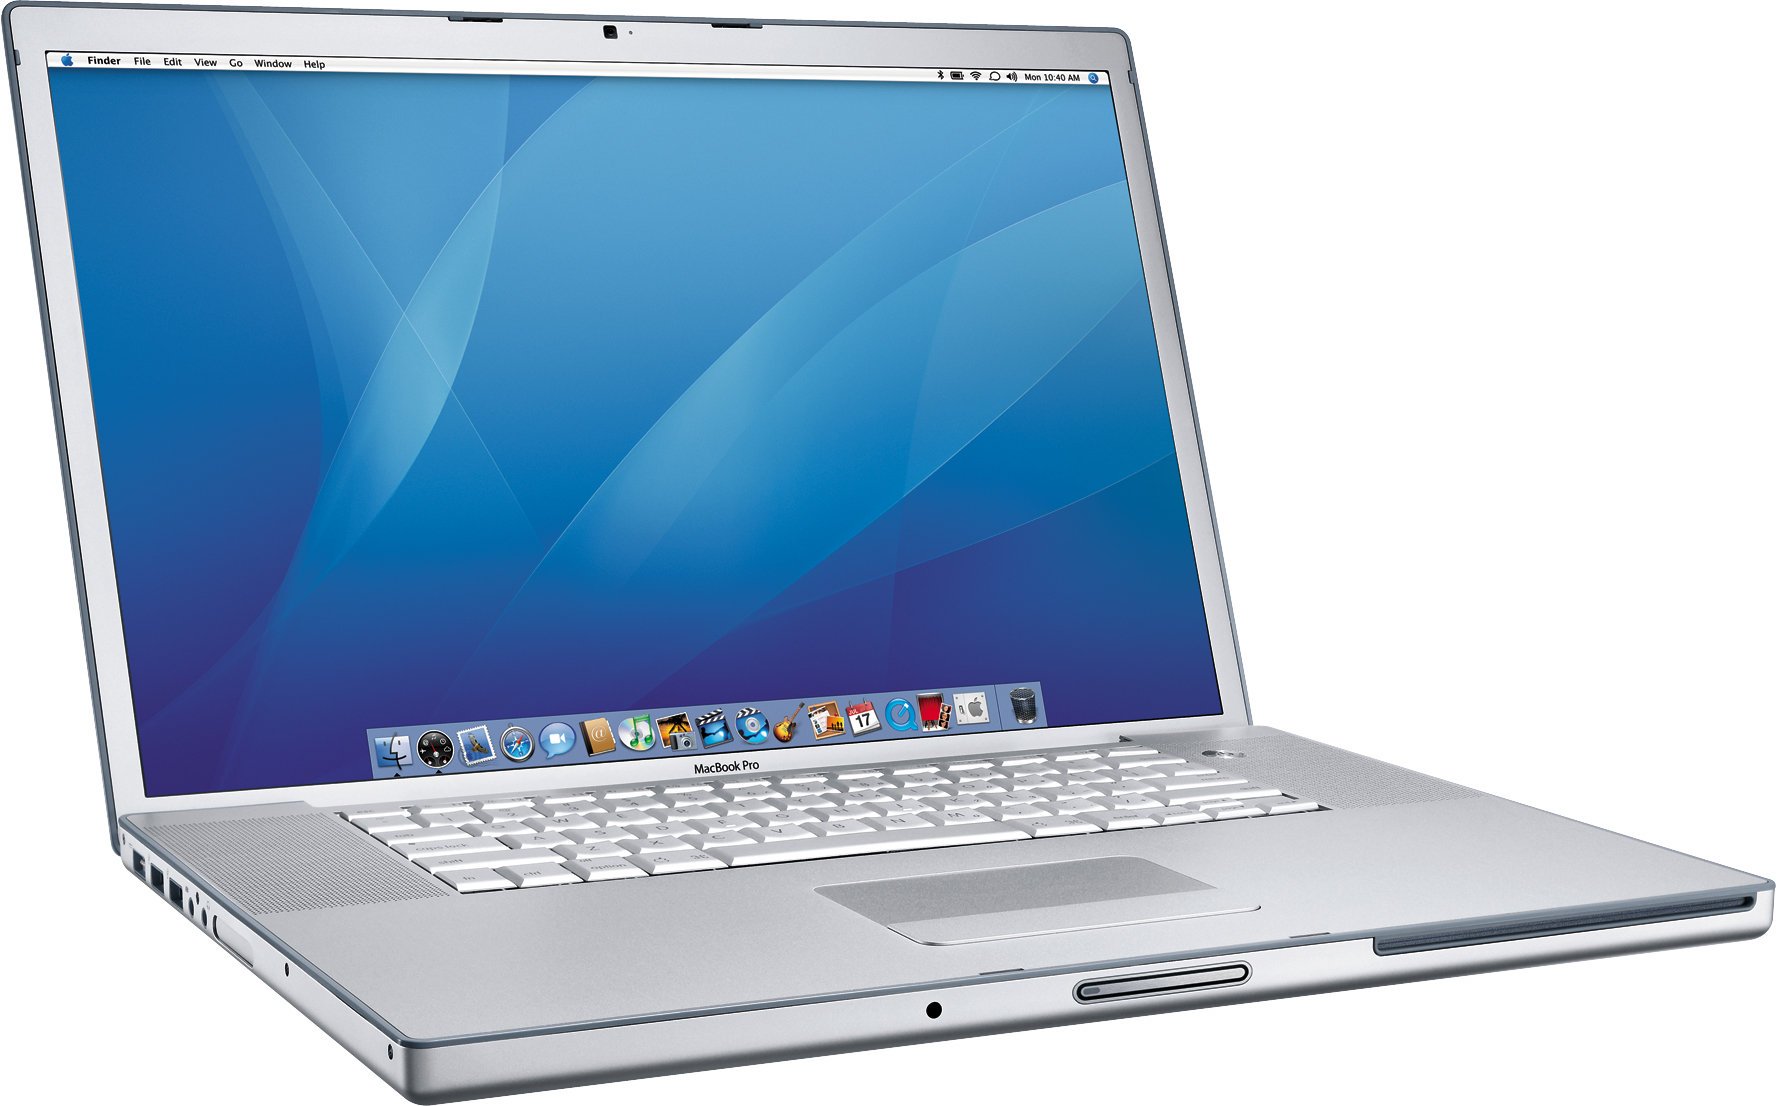 MacBook Pro (late 2006) 15inchで外付けSSDを起動させました